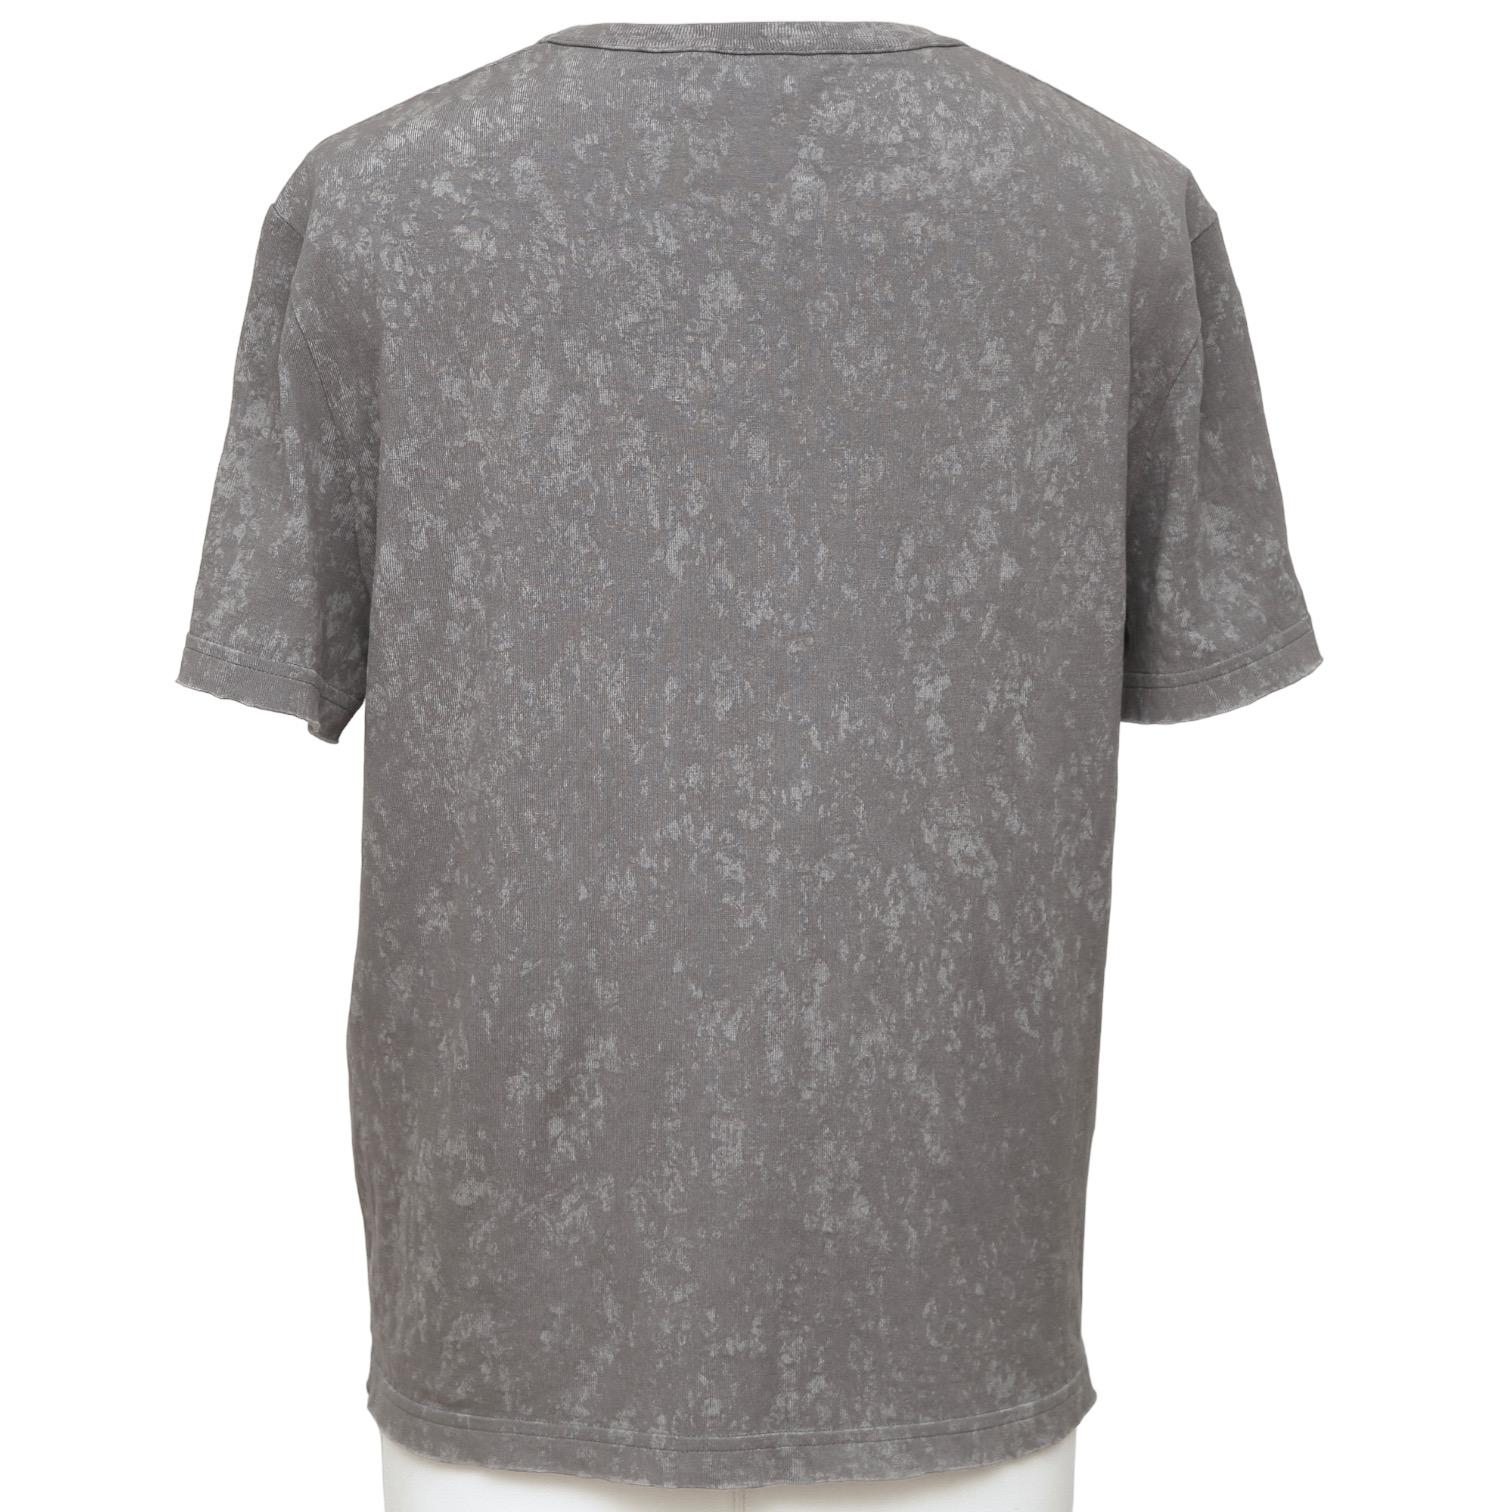 CHANEL Grey T-Shirt Top Shirt Short Sleeve Crew Neck Tie-Dye 34/36 2020 2